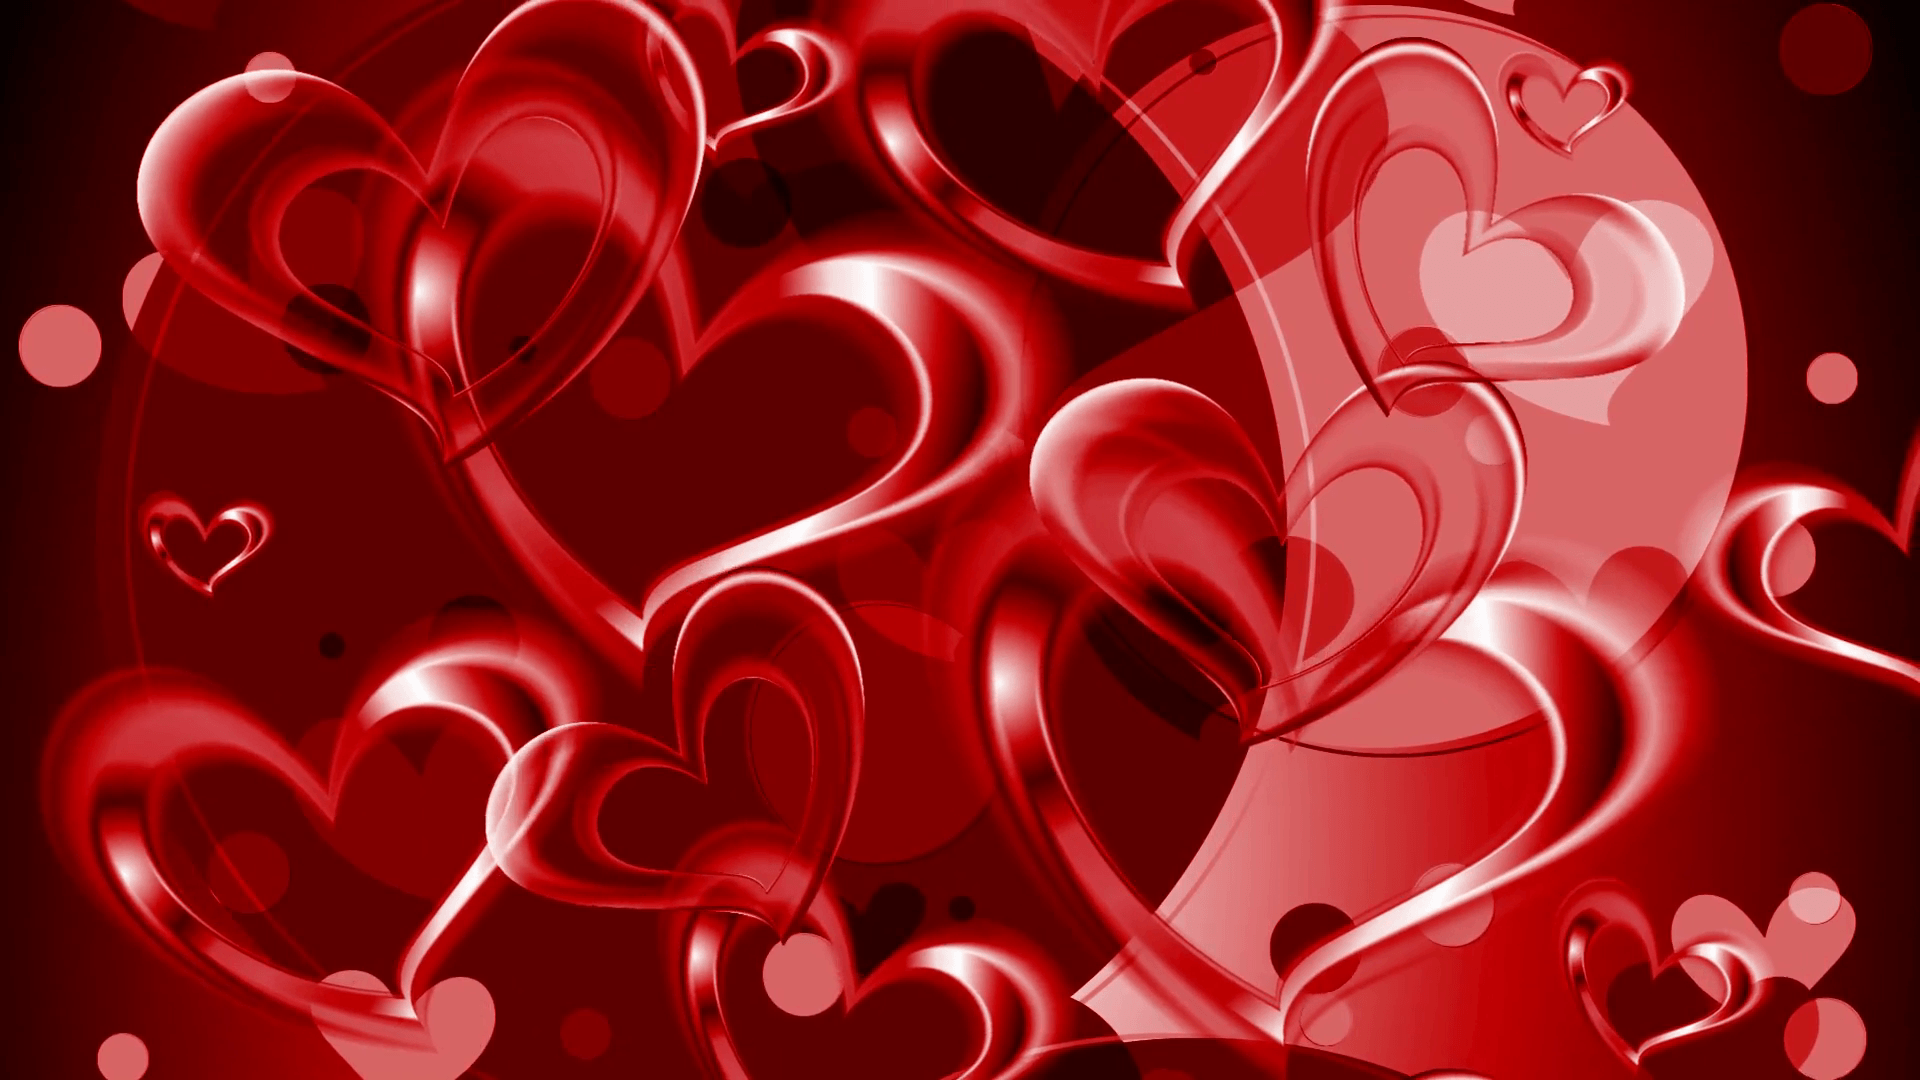 Valentine Day Graphic Design With Red Hearts Valentines